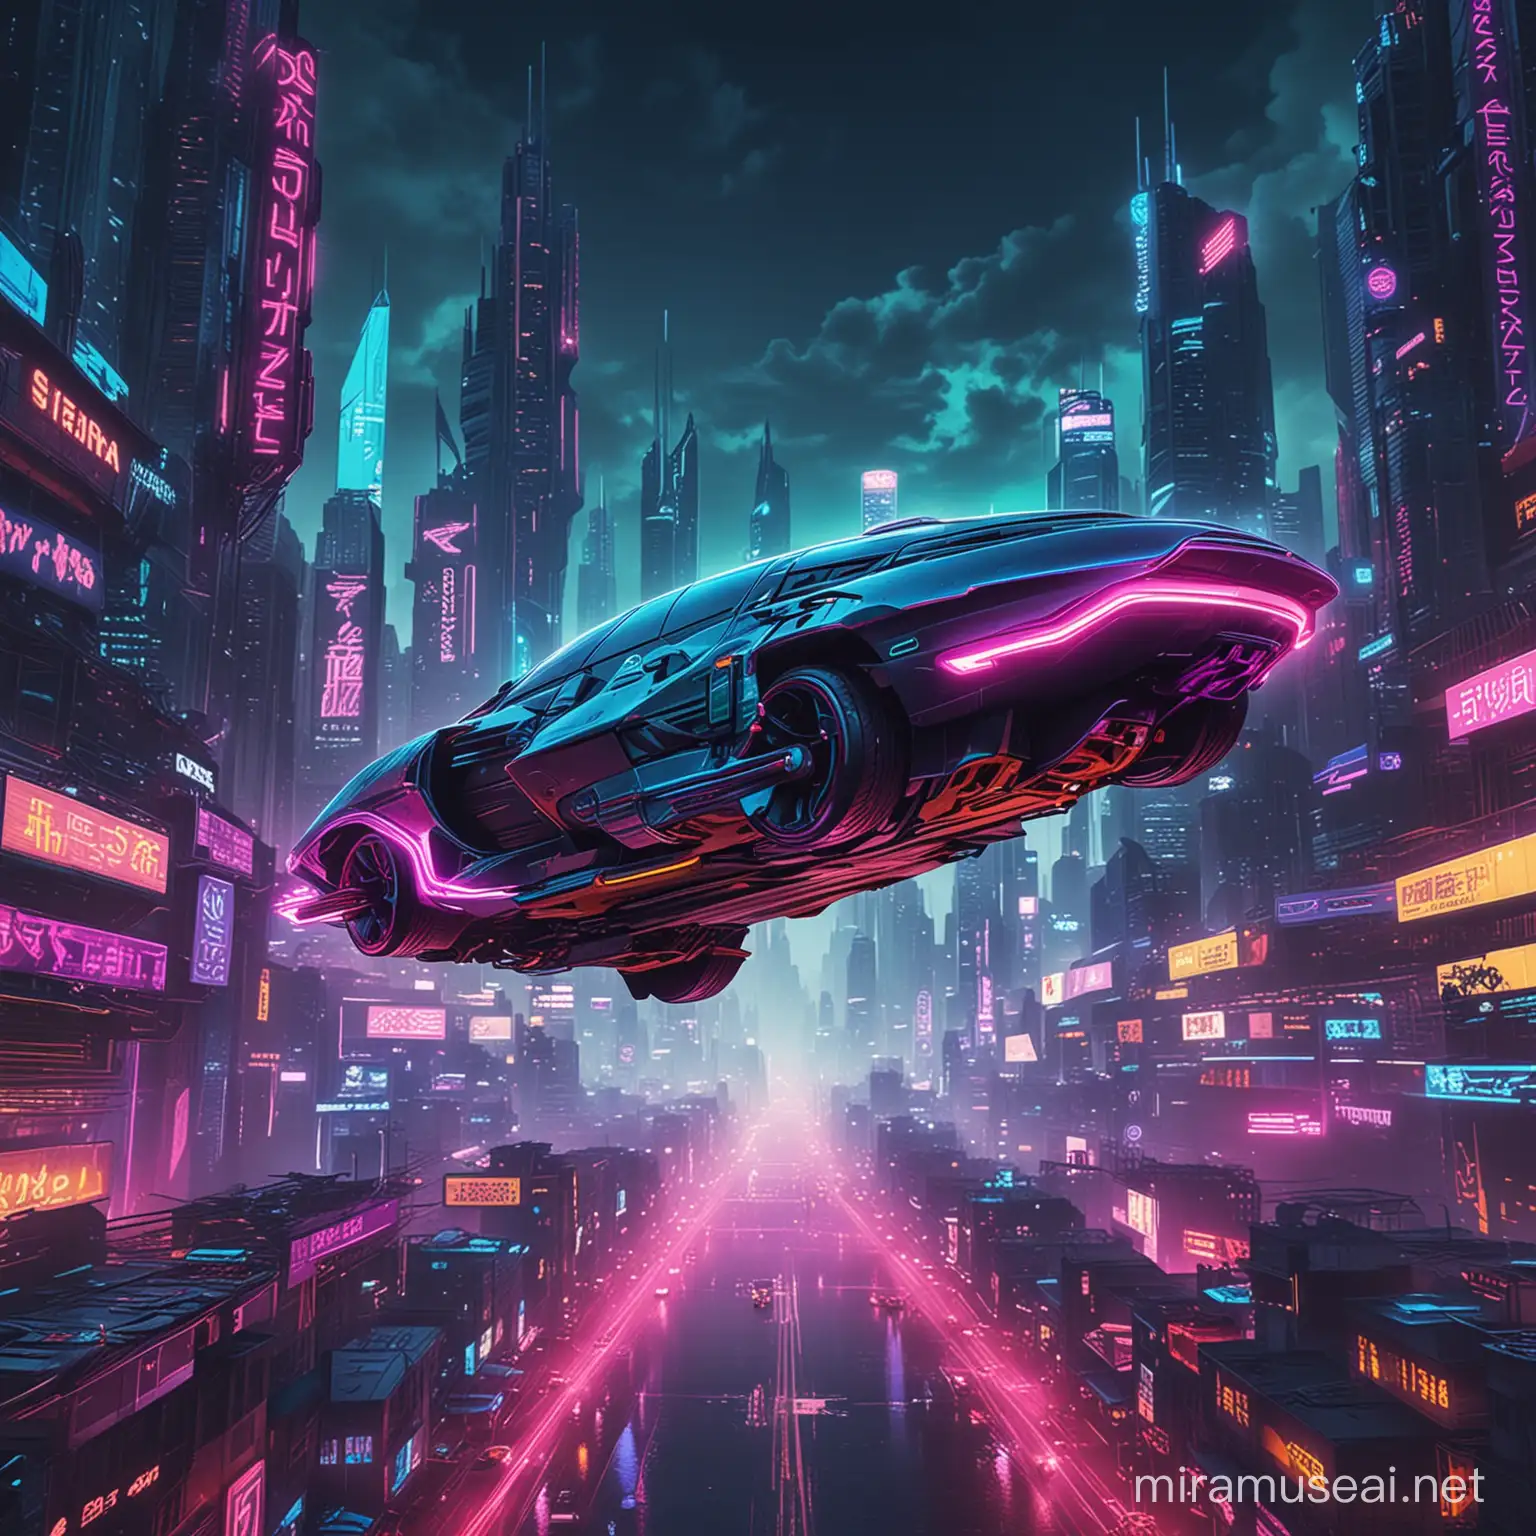 Futuristic Vehicle Gliding Above Vibrant NeonLit Cyberpunk Metropolis